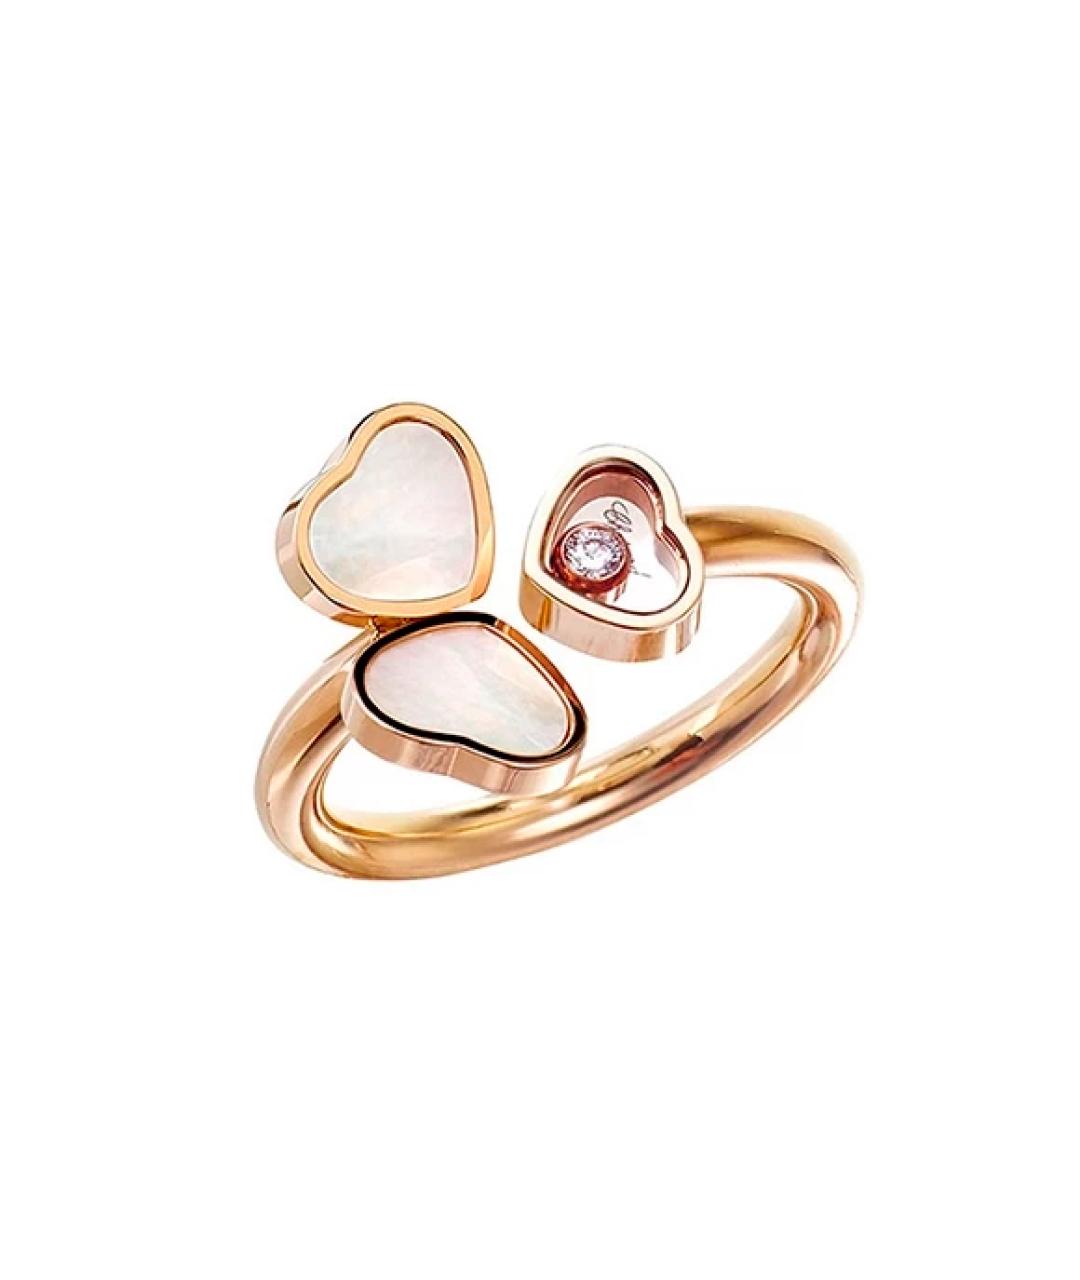 CHOPARD Золотое кольцо из розового золота, фото 1